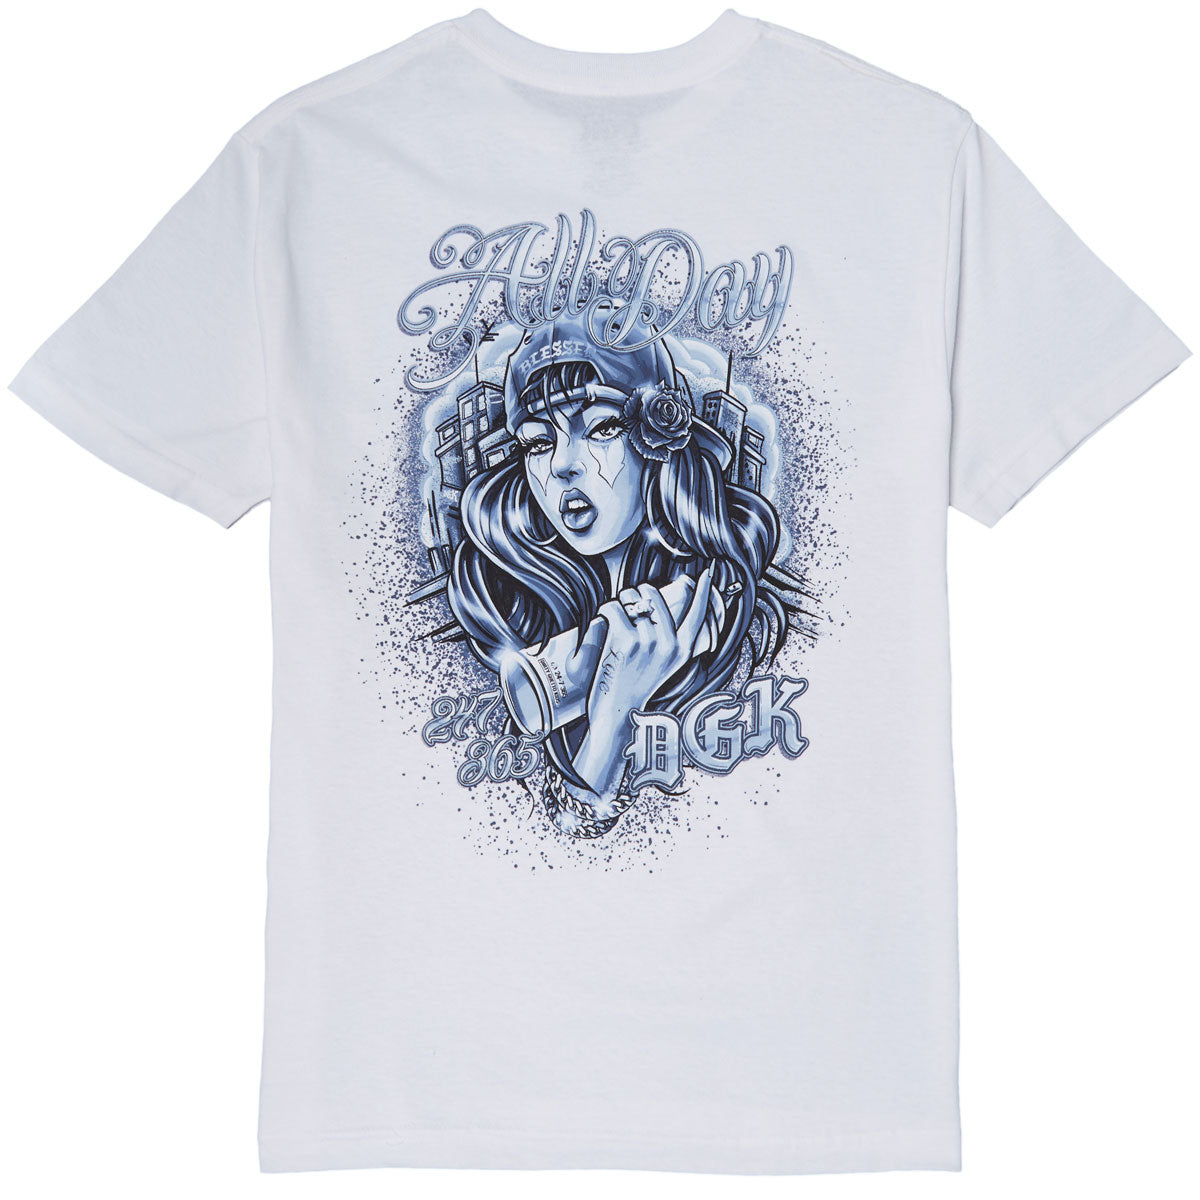 DGK Hyna T-Shirt - White image 1